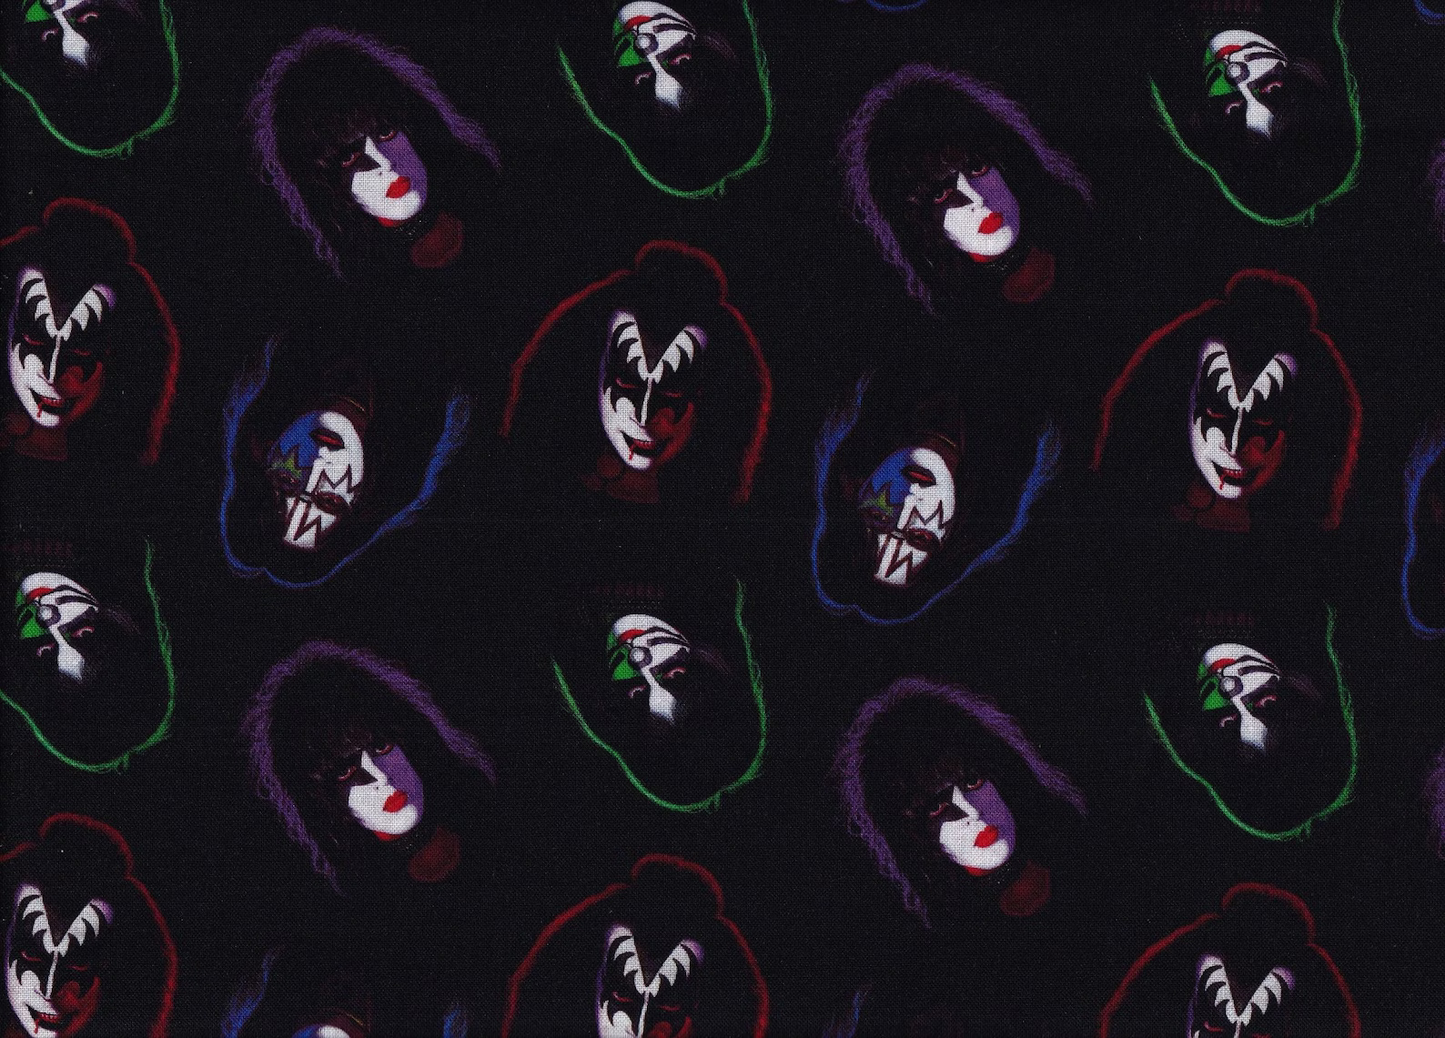 Kiss Band Fabric / Kiss Band Members Fabric $ 16.96/m